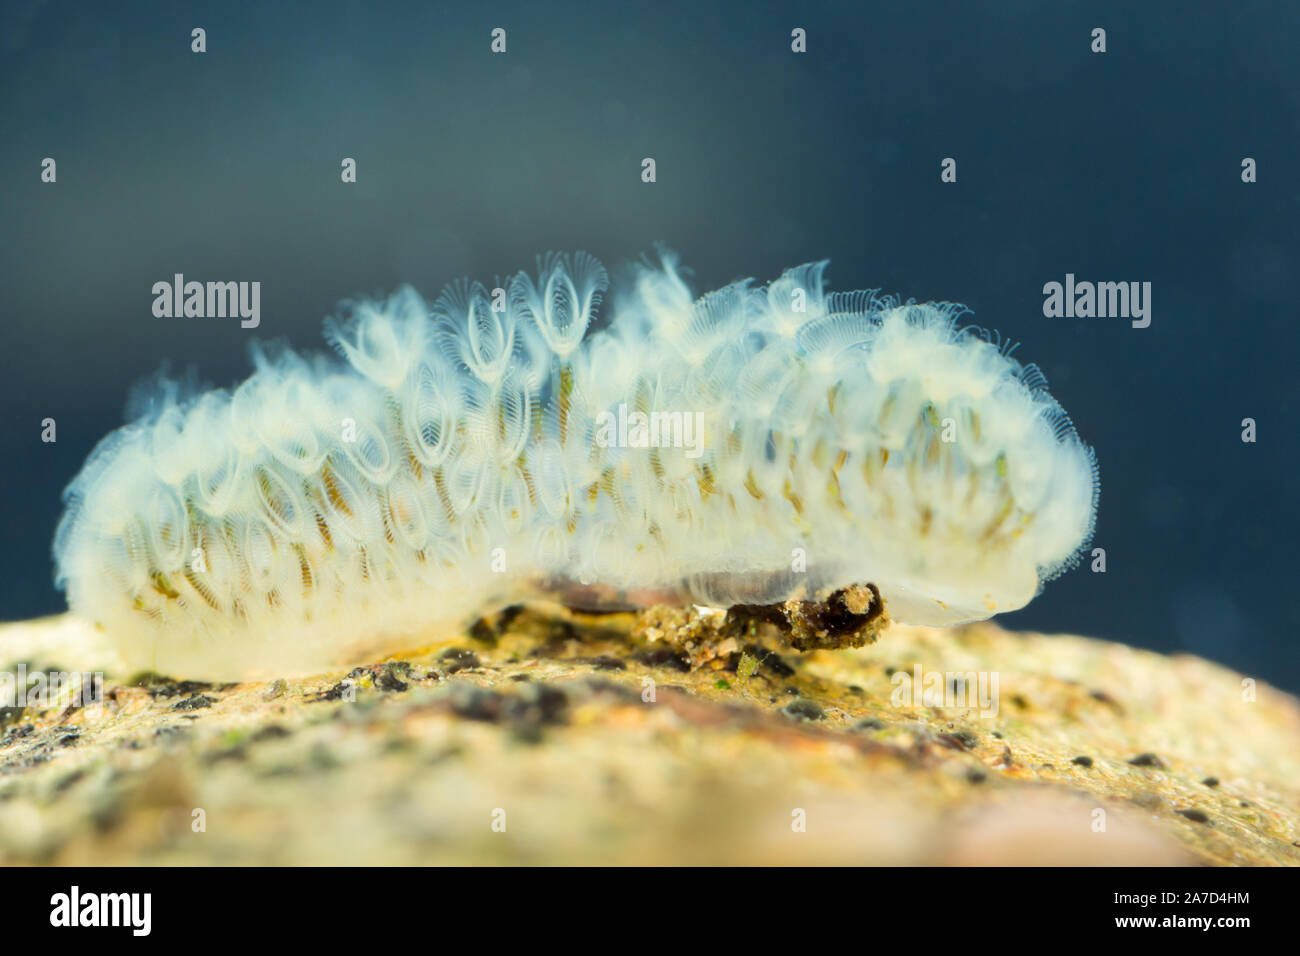 Freshwater moss animal Stock Photo